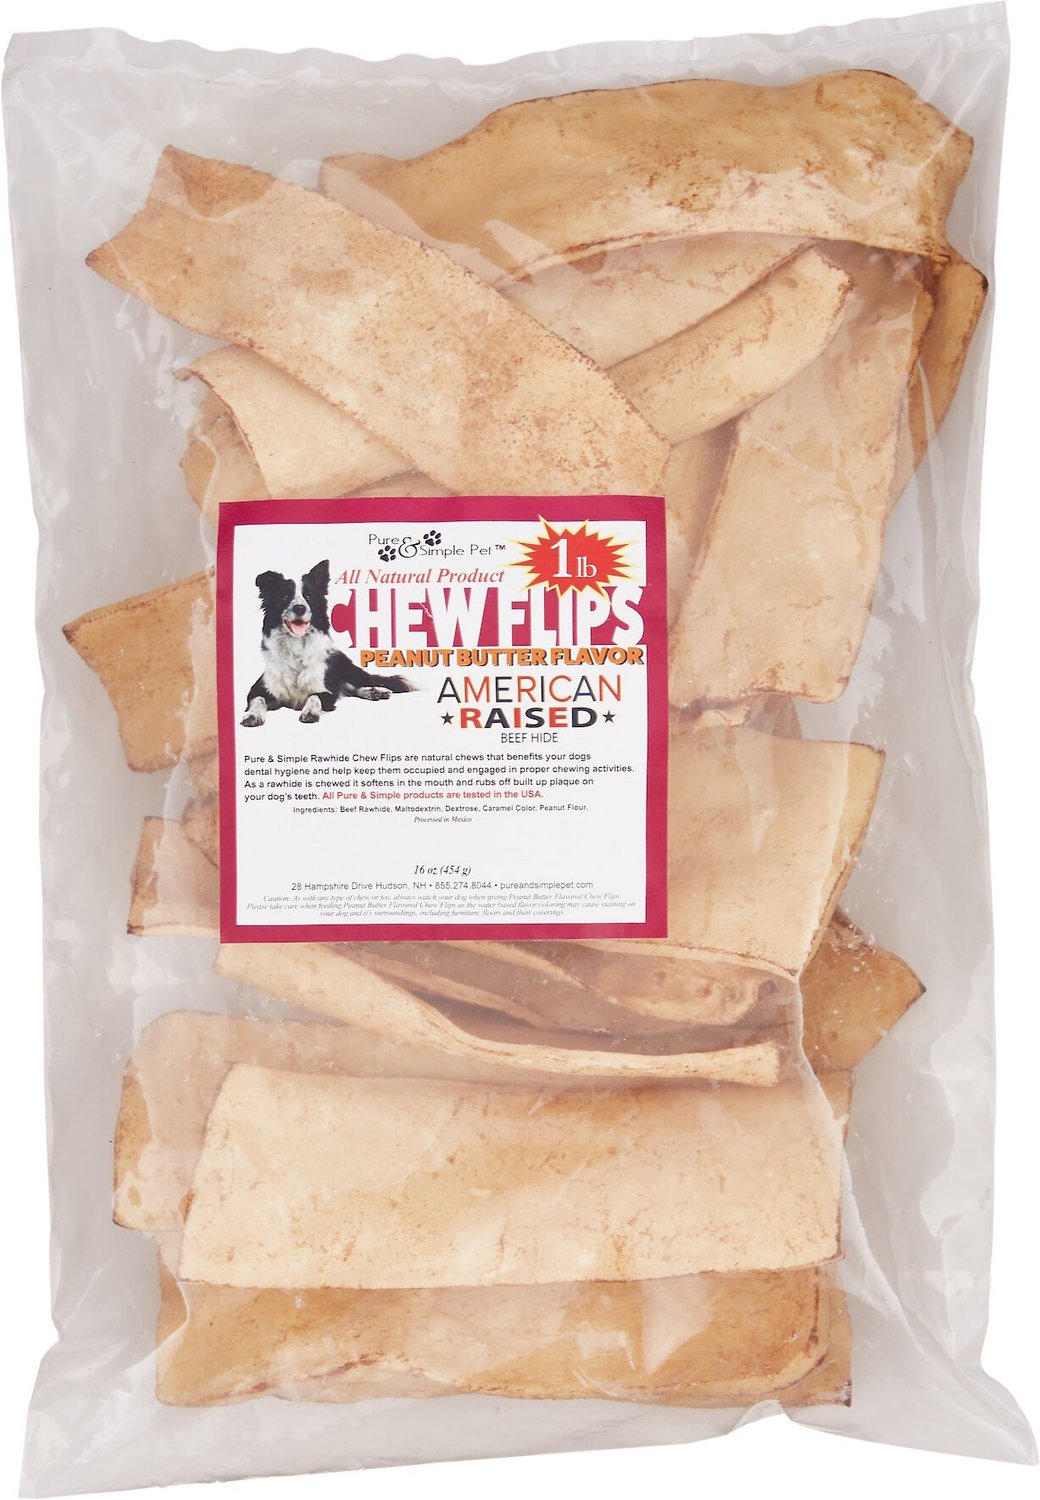 flavored rawhide dog chews